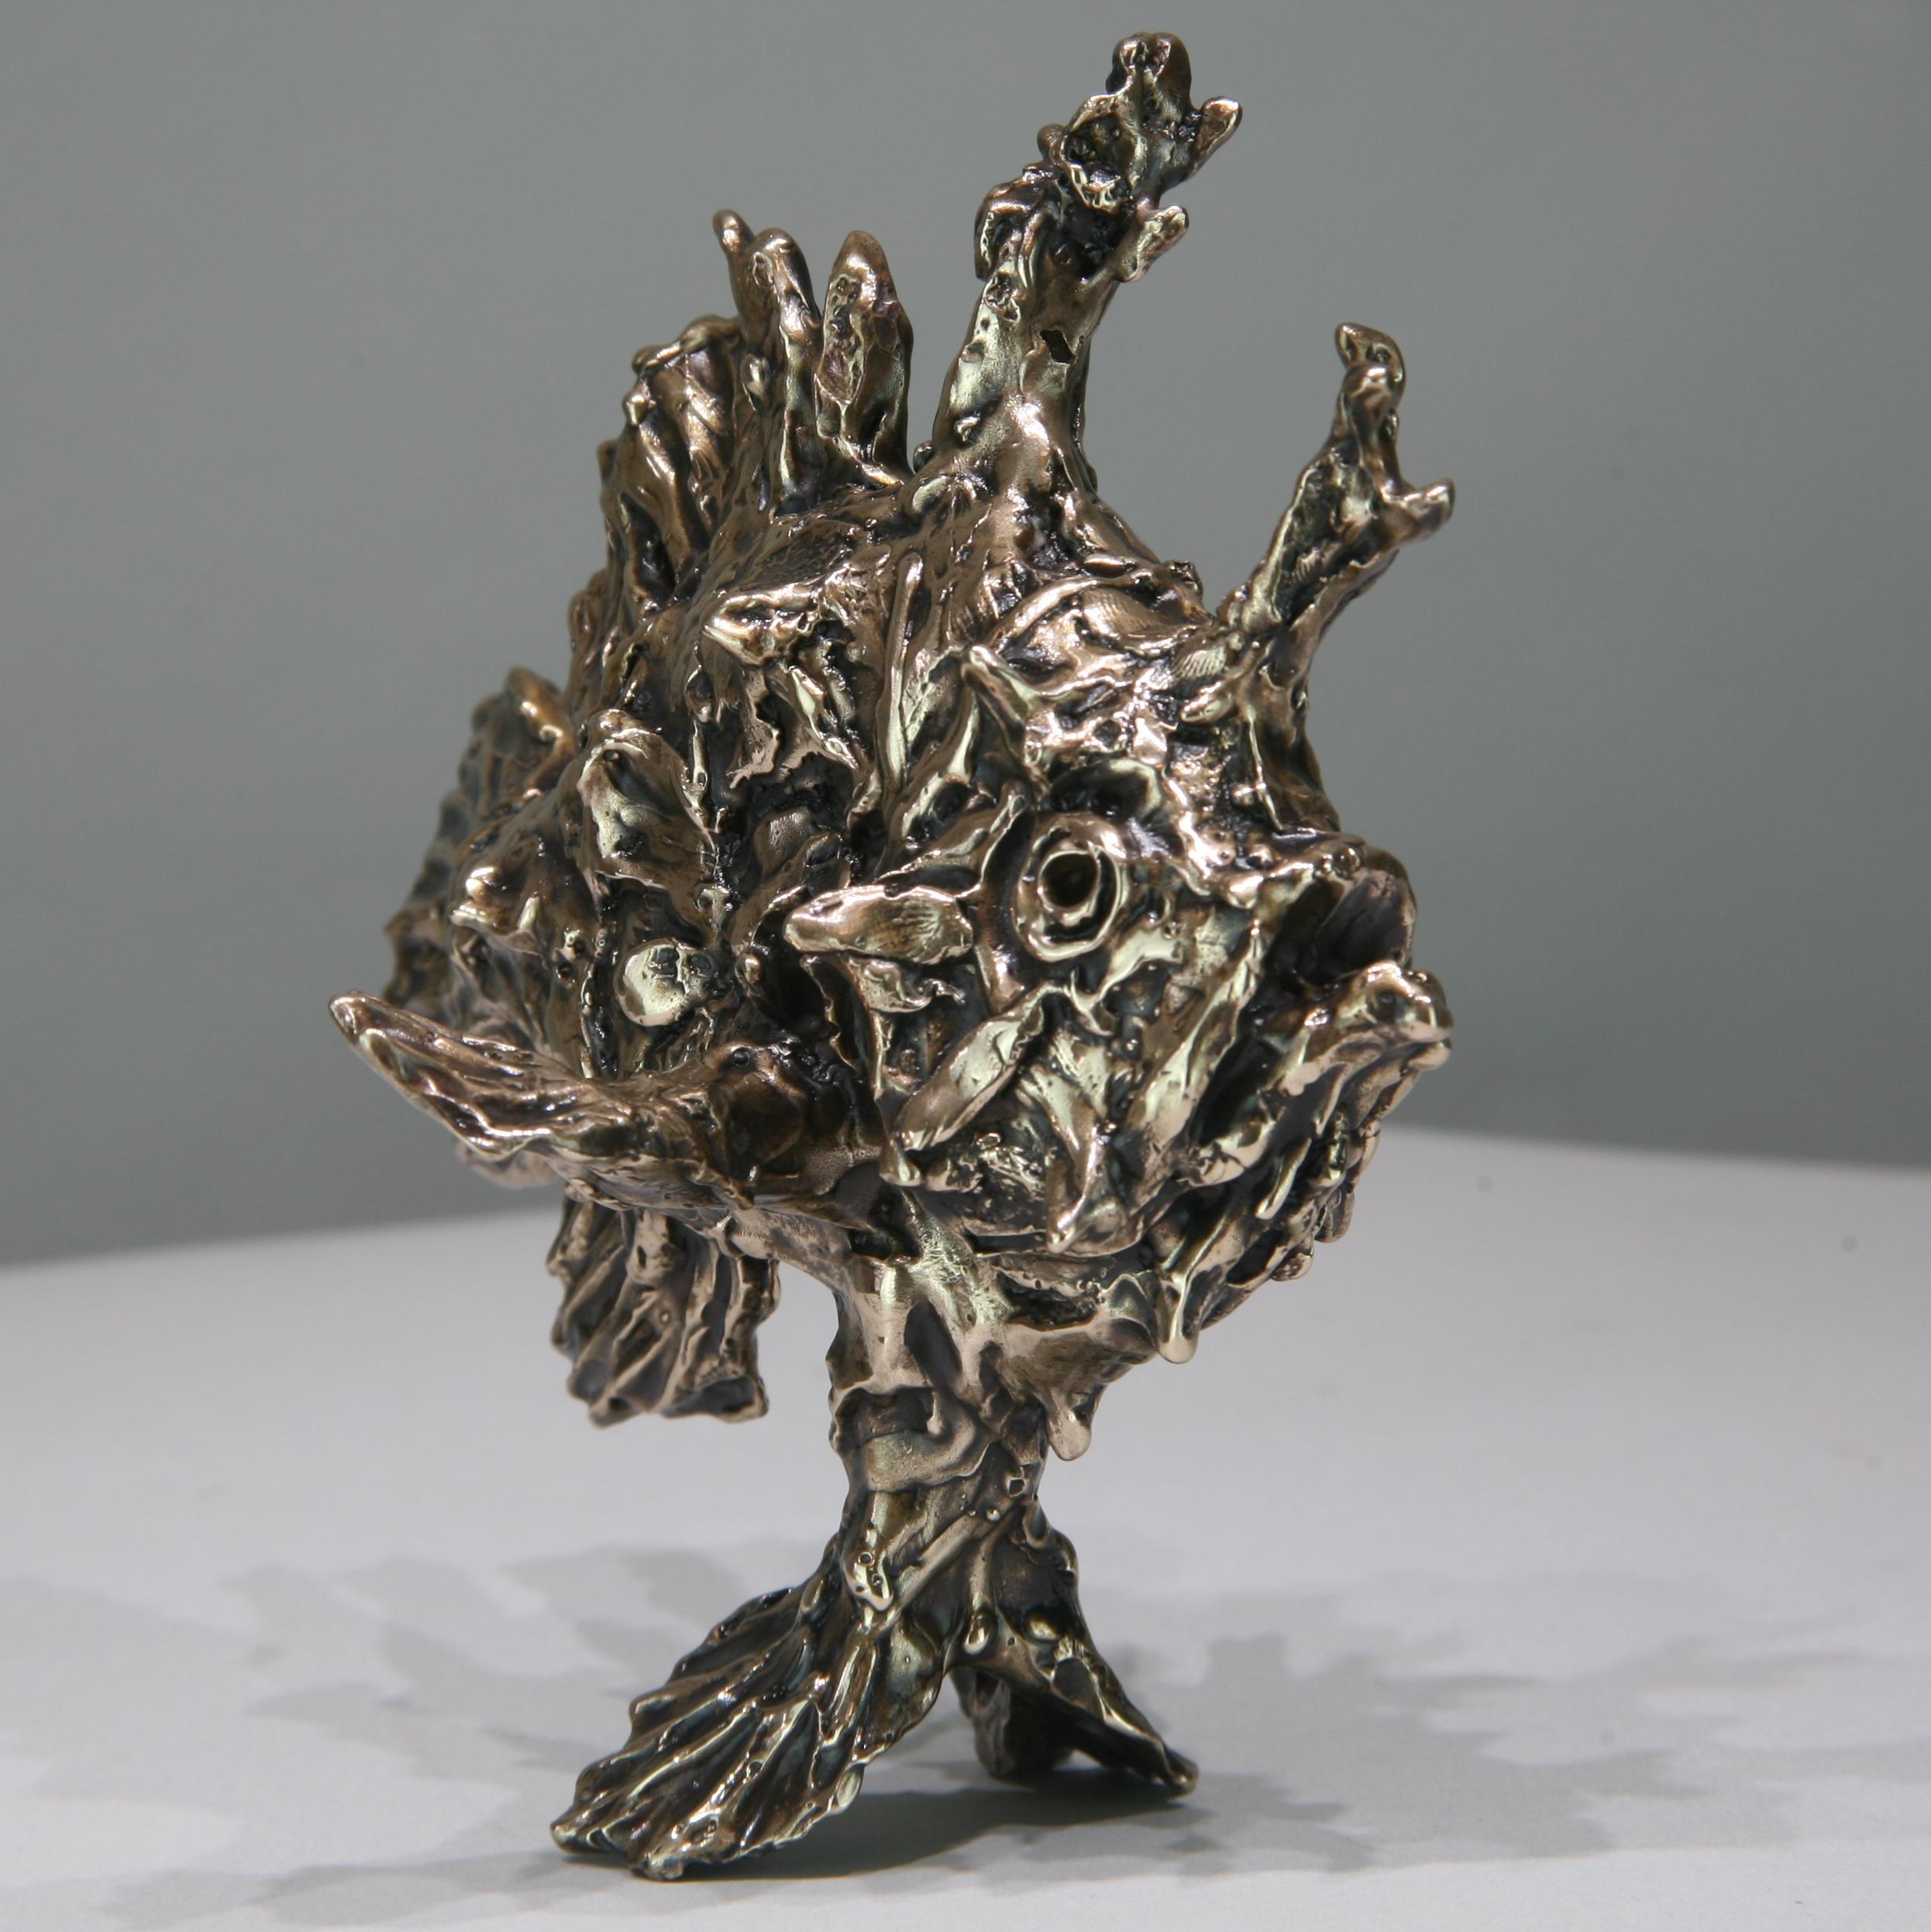 Sargassum Fish-original bronze wildlife- sculpture-artwork-contemporary art - Gold Figurative Sculpture by Andrzej Szymczyk